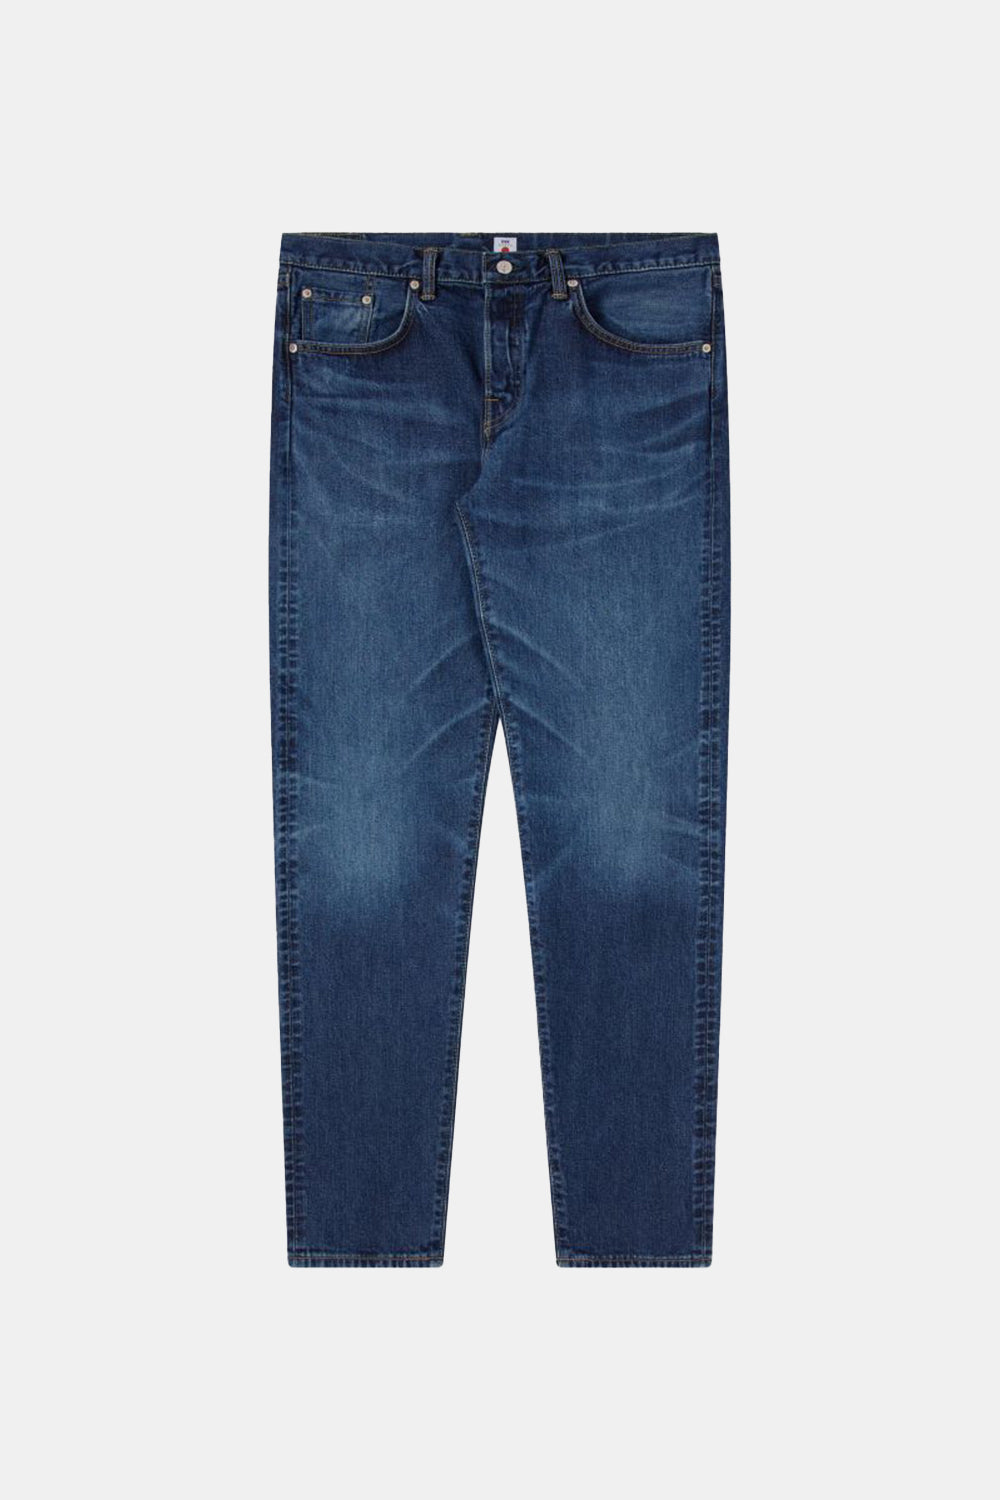 Edwin Regular Tapered Kaihara Yoshiko Jeans (Blue Mid Dark Used)